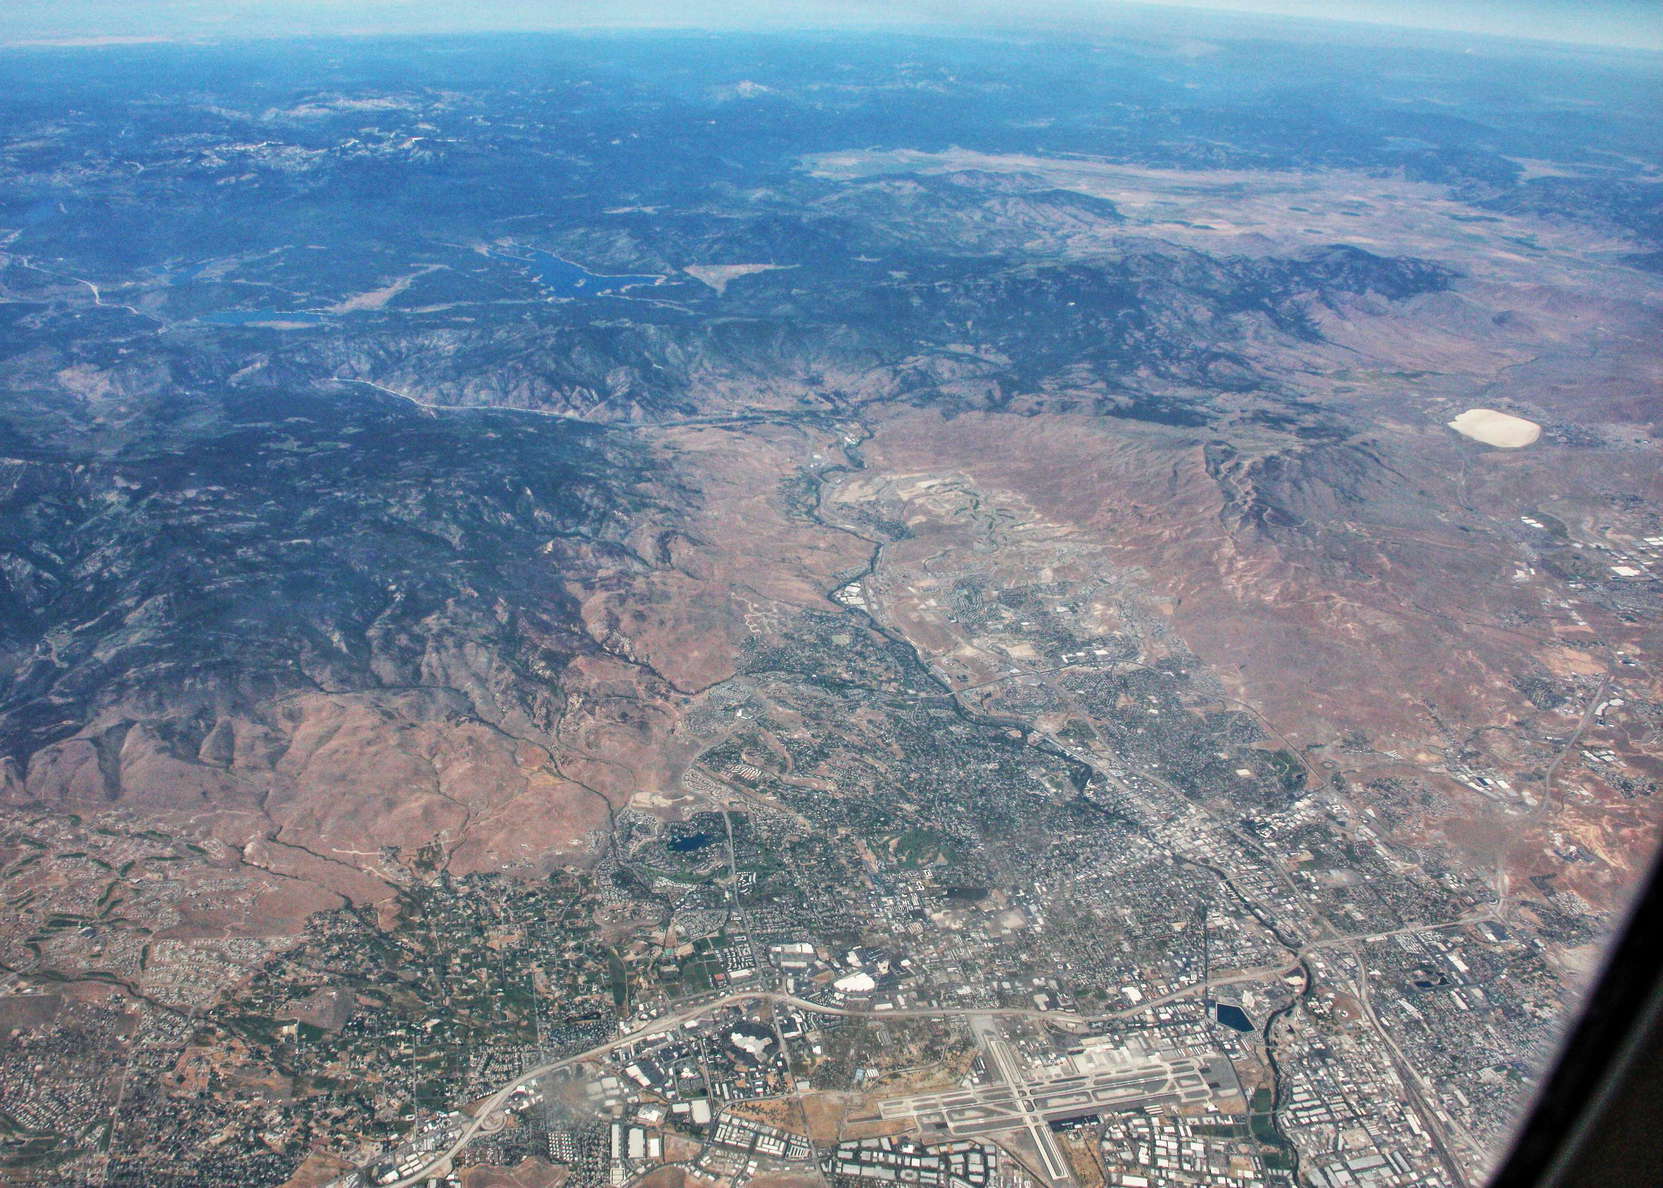 Reno and Sierra Nevada